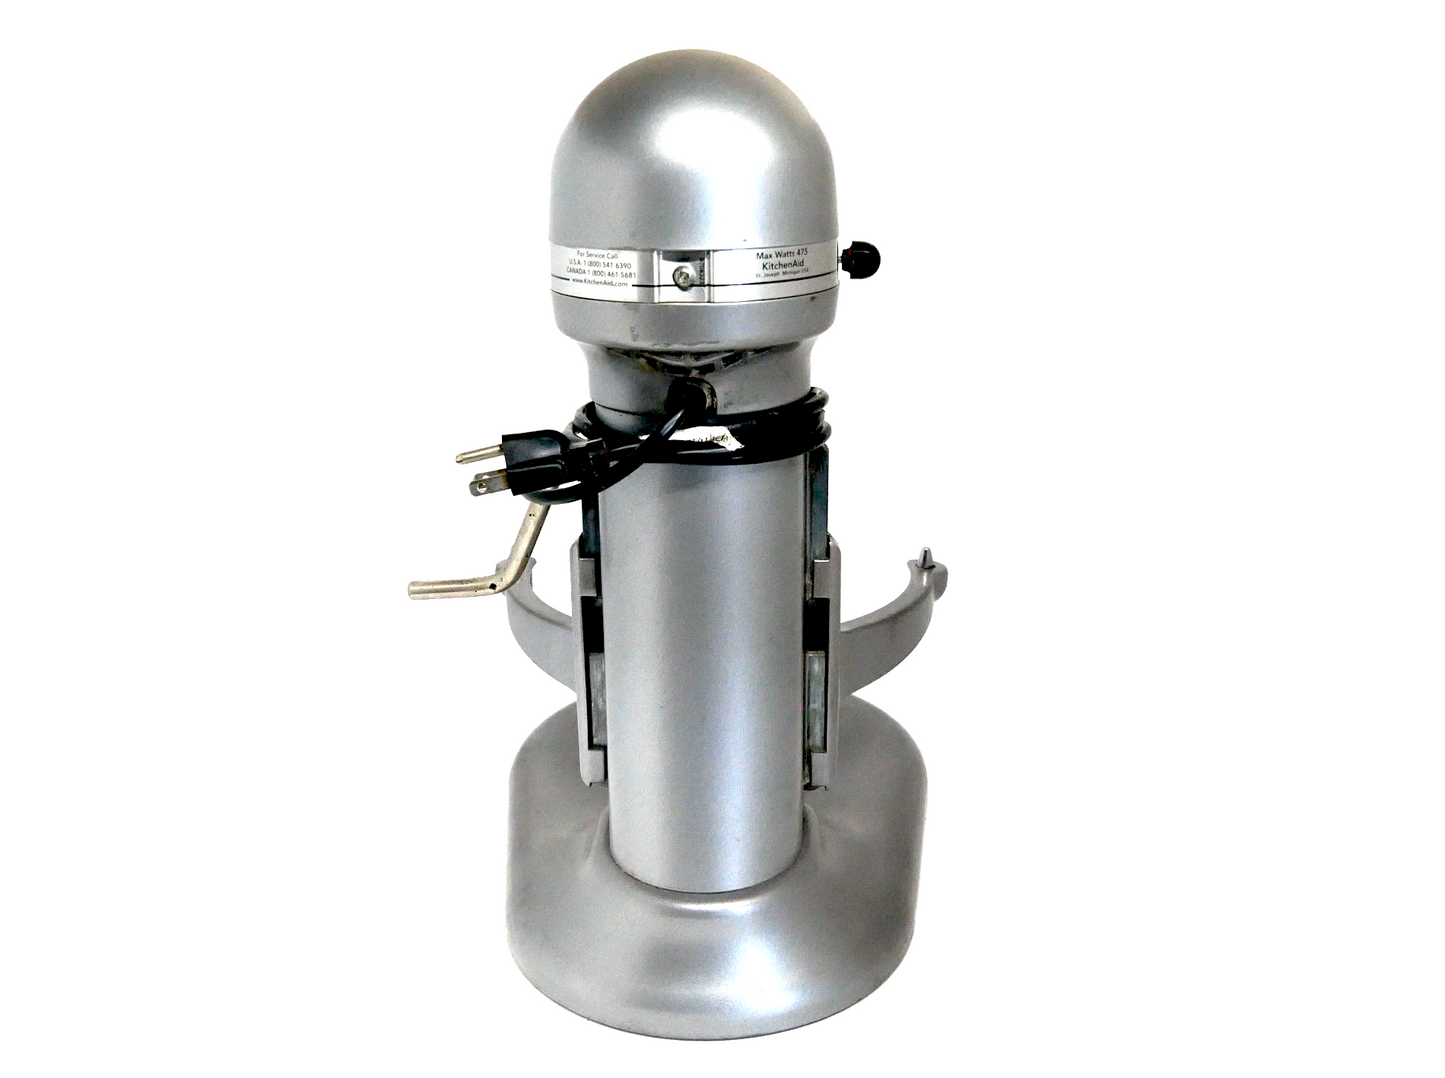  Kitchen Aid - Pro 5 Plus 5 Quart Bowl-Lift Stand Mixer